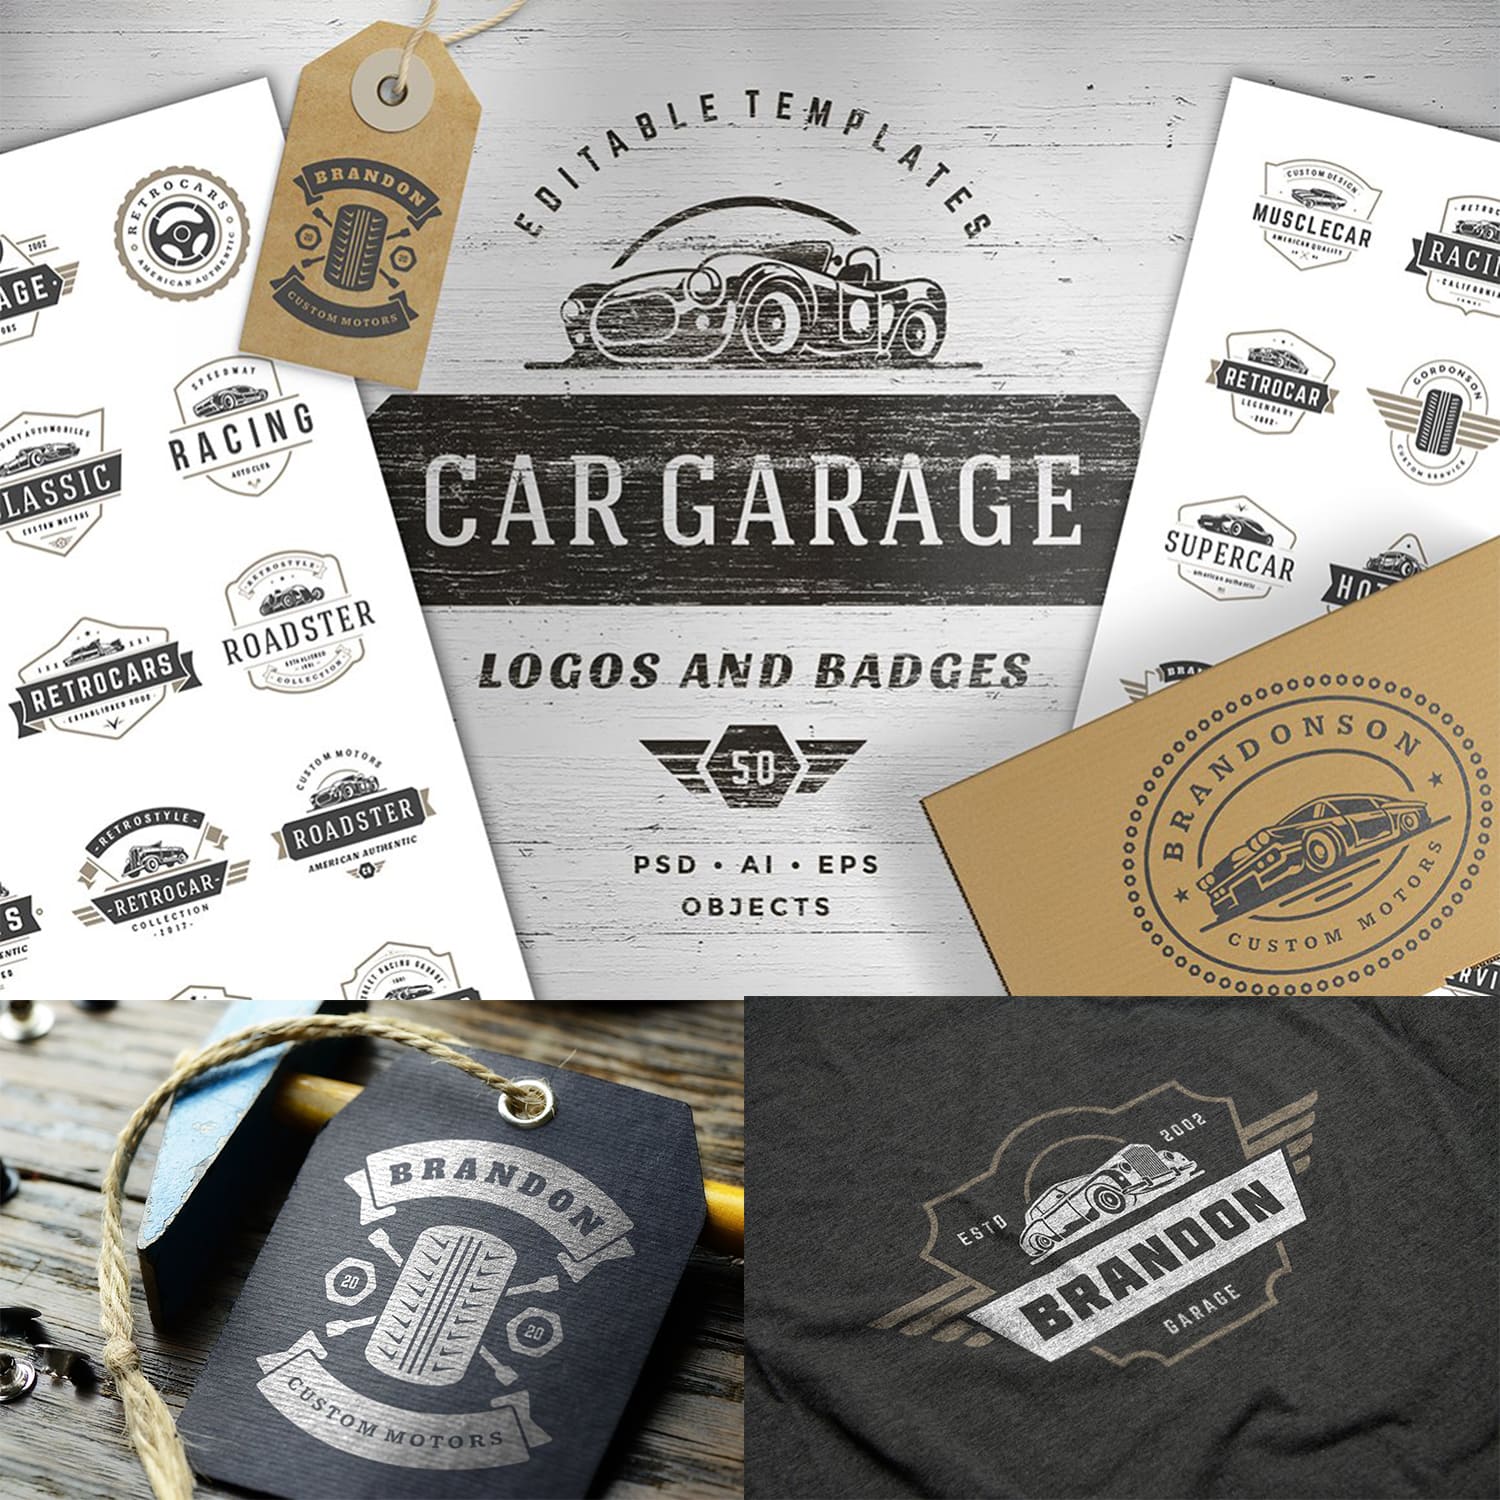 Car Garage Badges & Logos cover image.